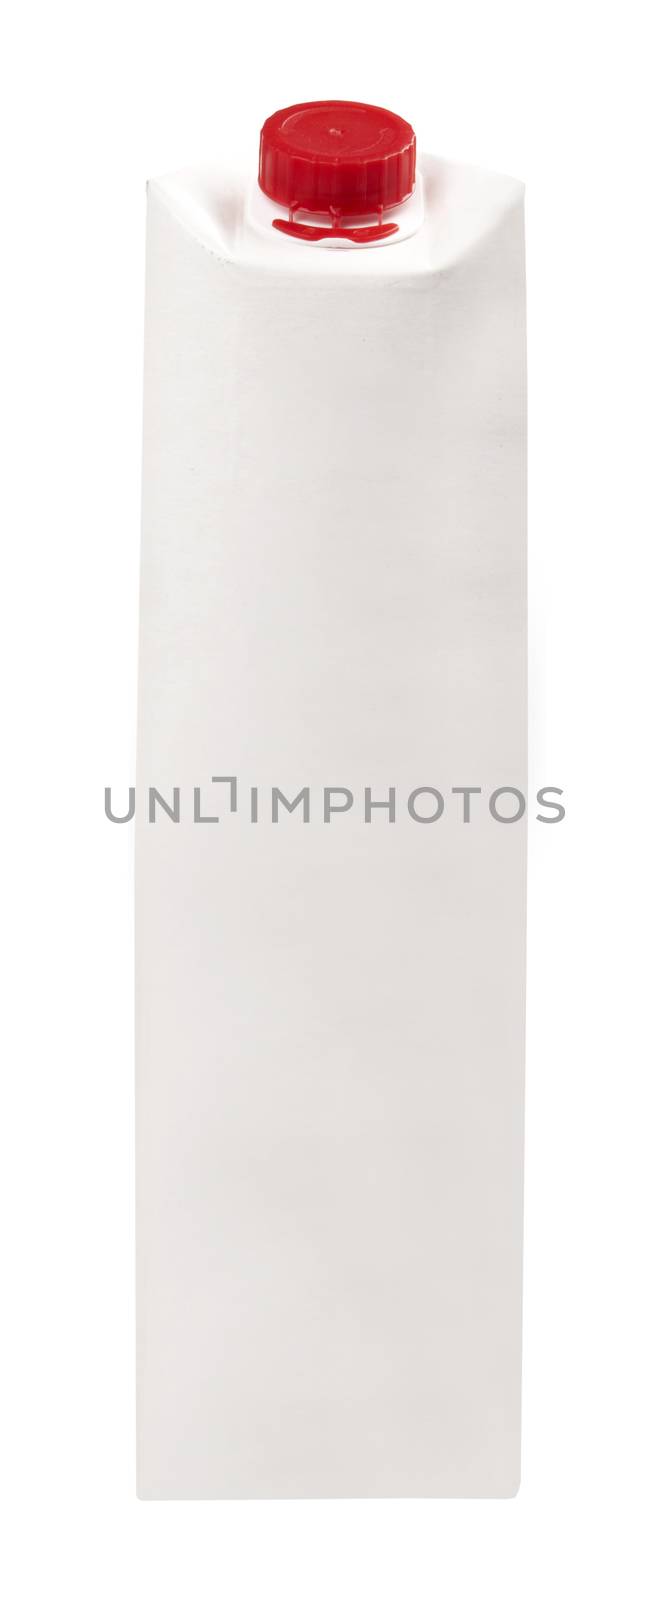 White milk or juice carton box isolated on a white background